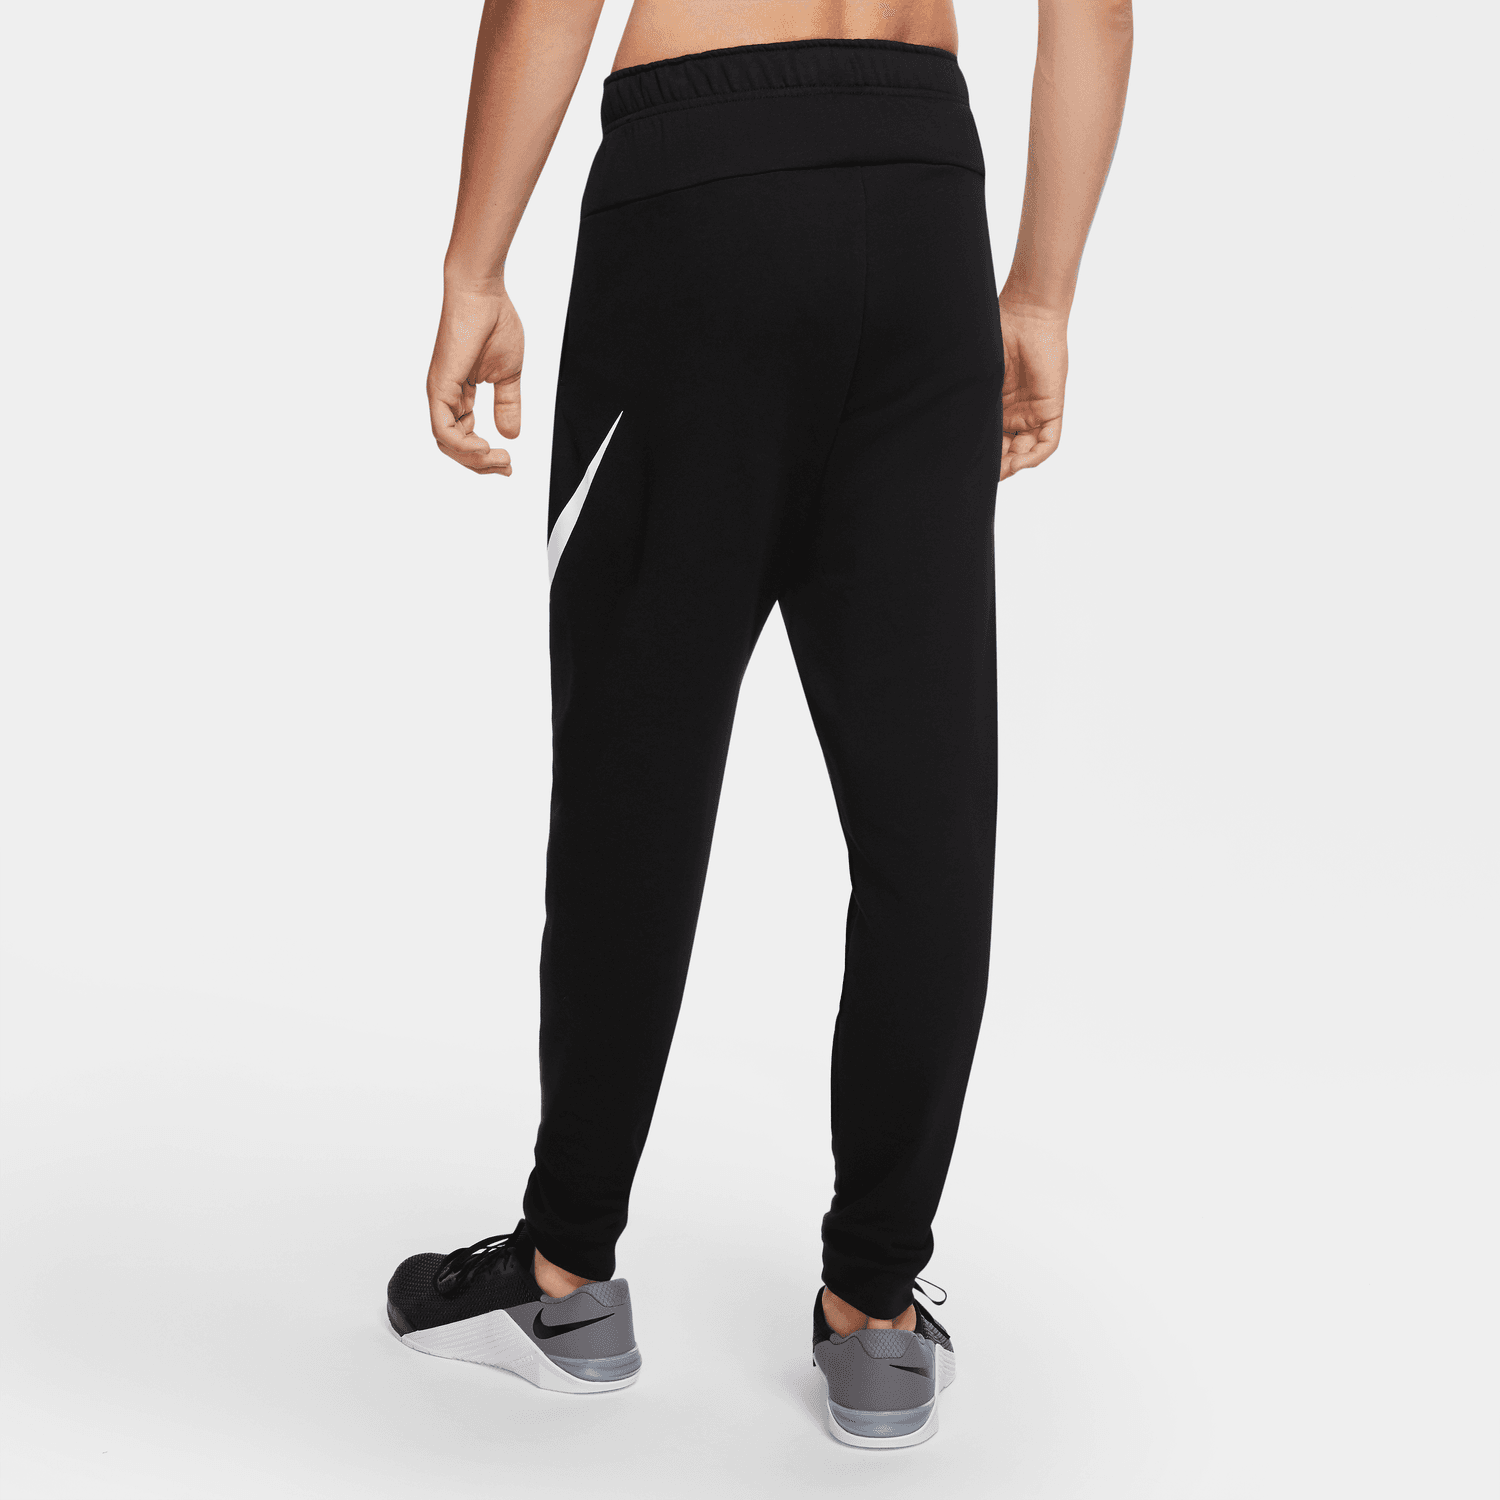 Pantalon Nike Dry Graphic - Noir/Blanc